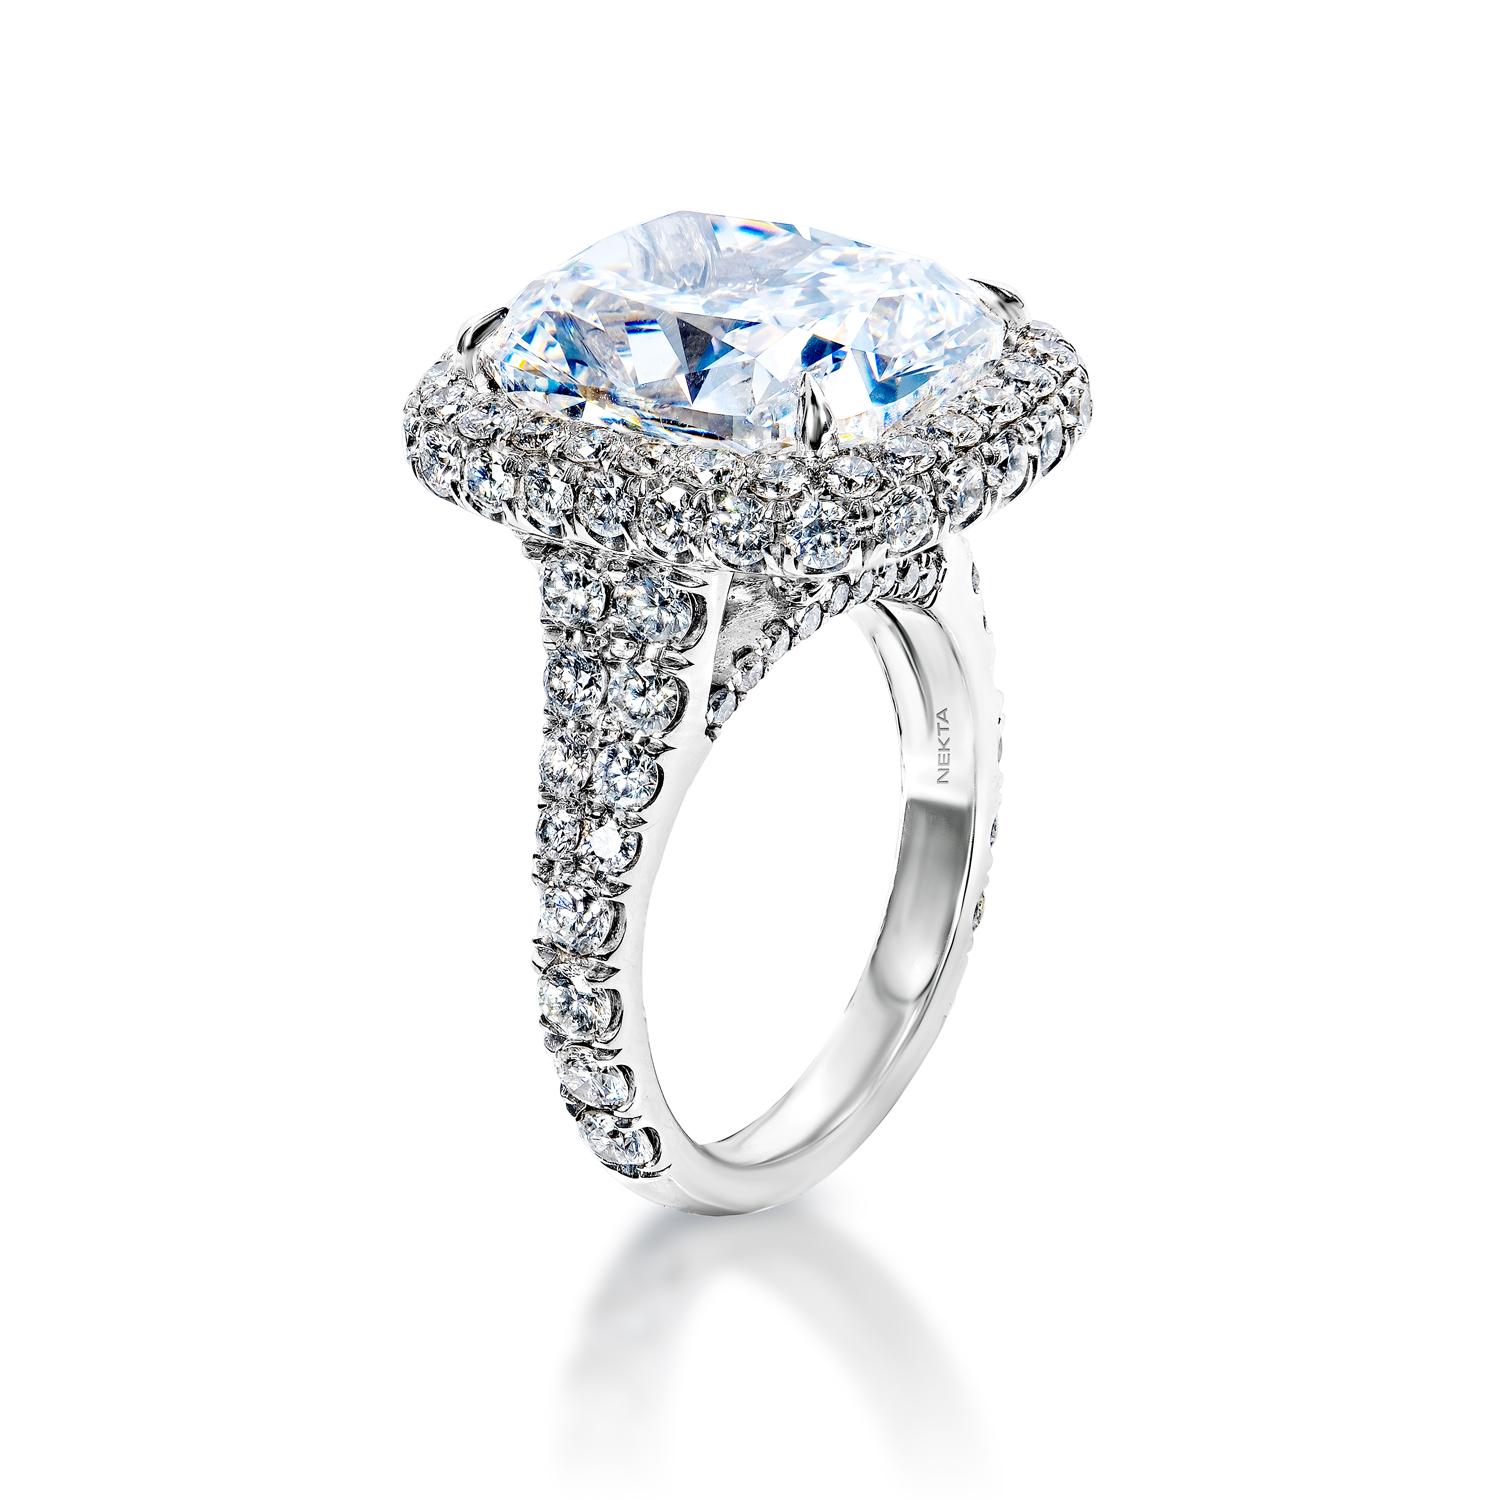 13 carat diamond ring